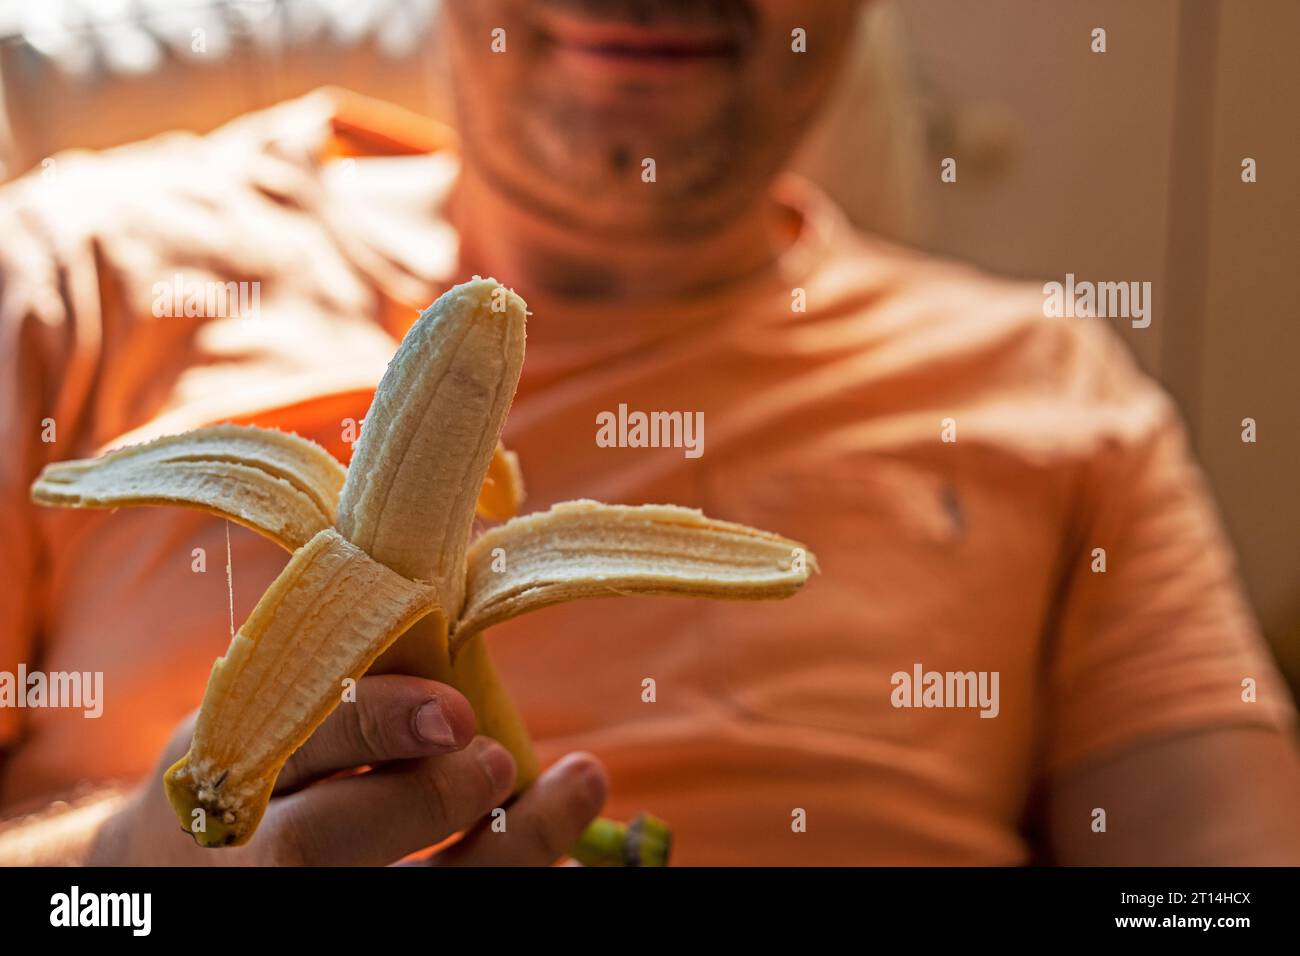 man holding peeled banana before eating Stock Photo